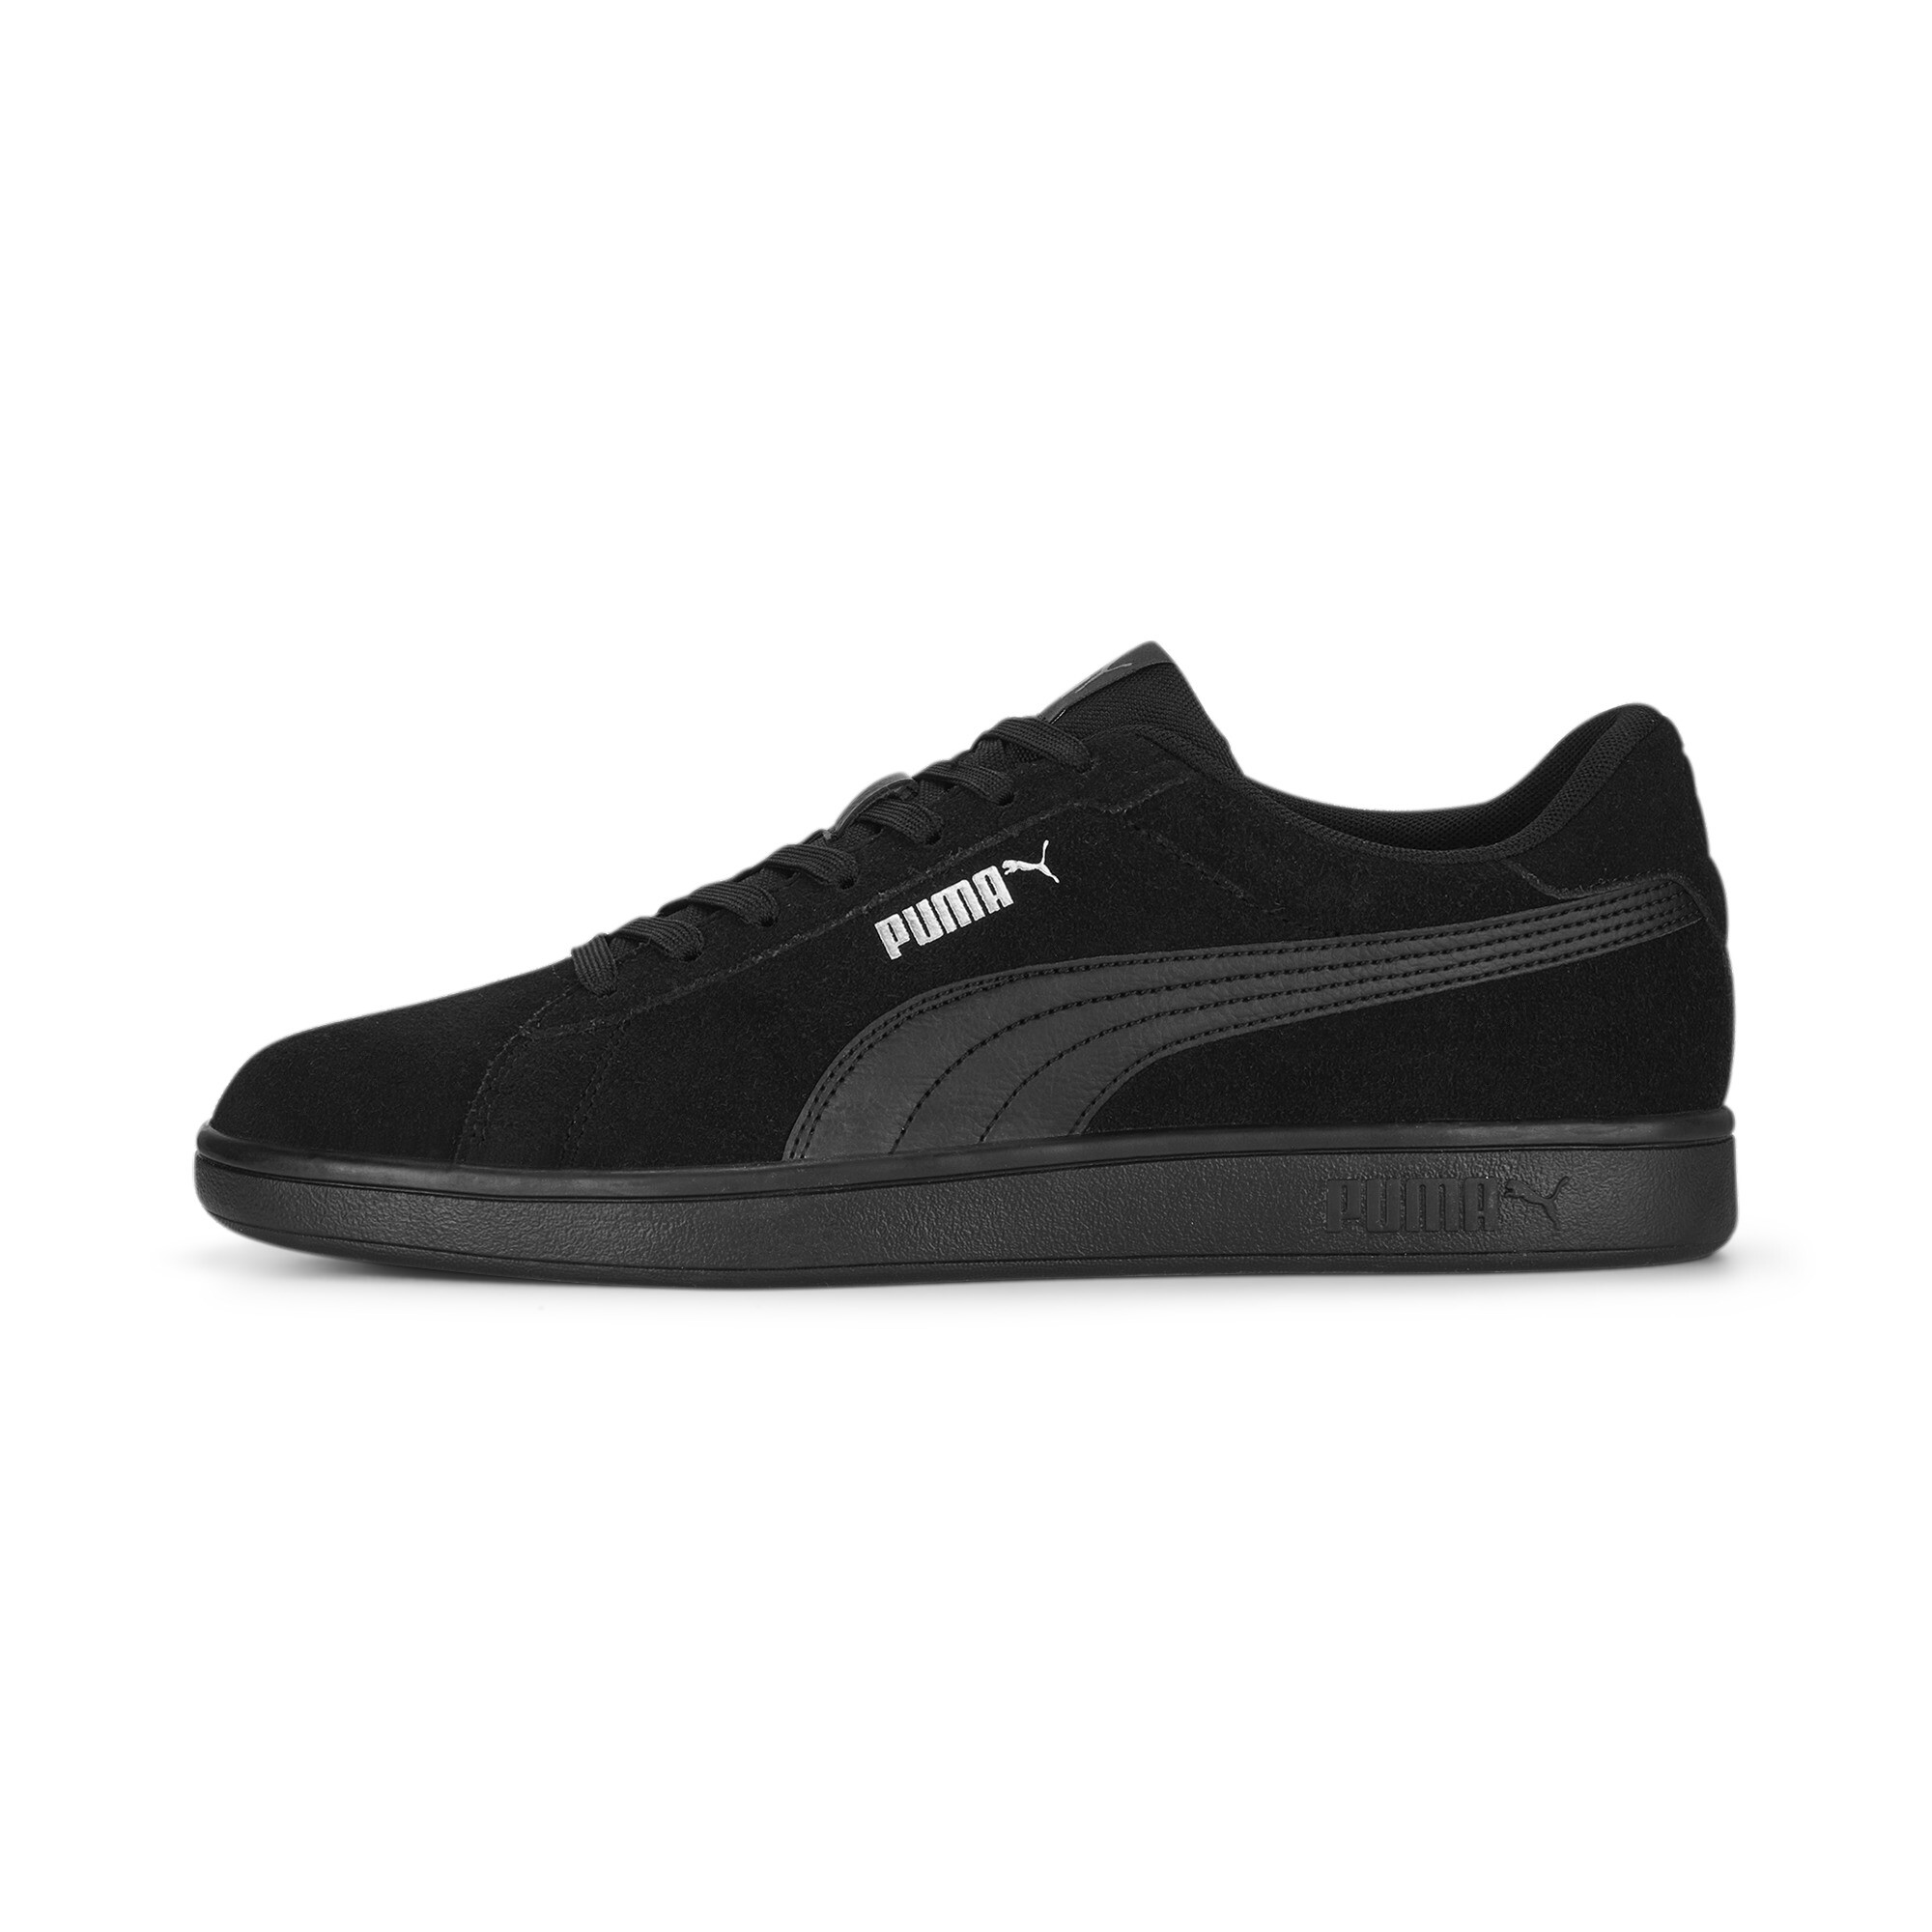 Puma Smash 3.0 Sneakers, Black, Size 44.5, Shoes